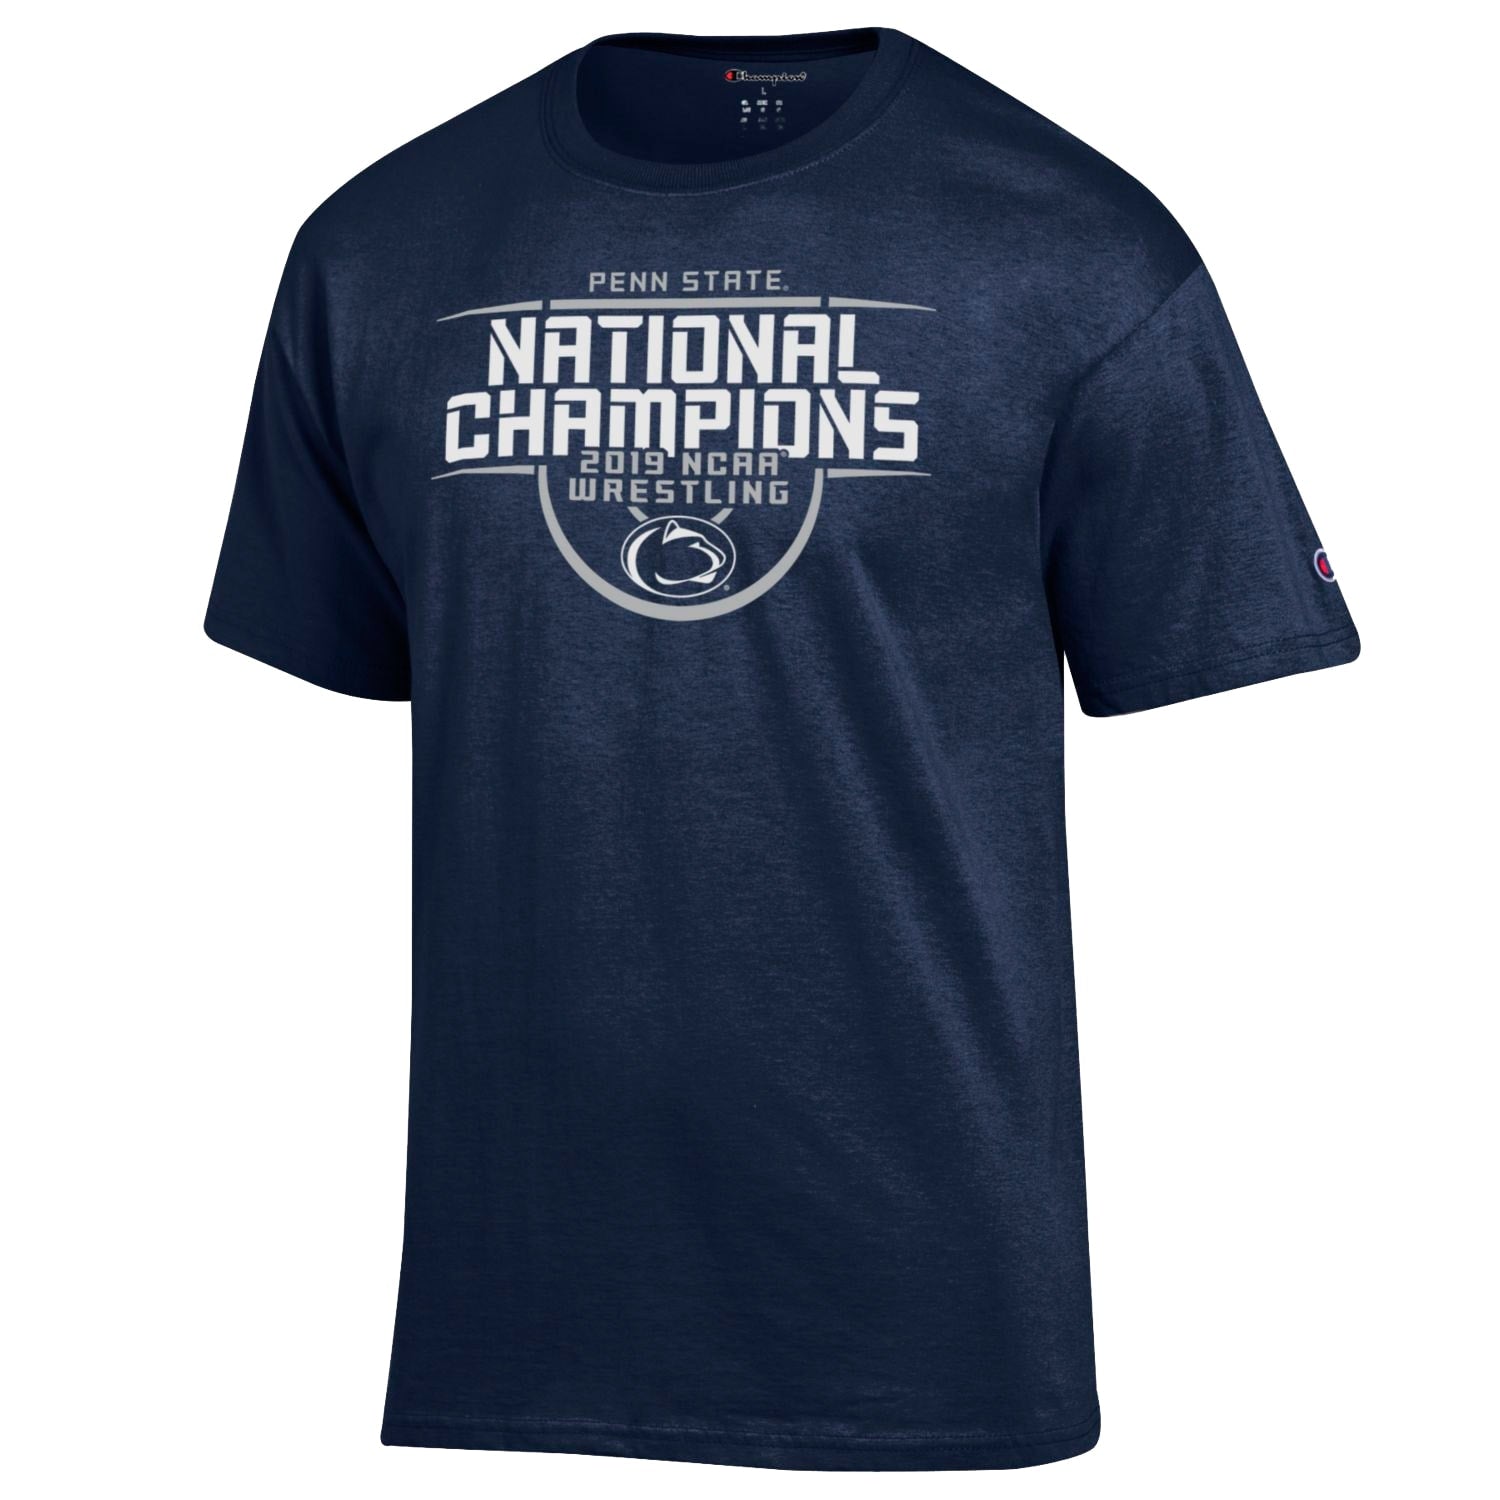 national championship 2019 shirts